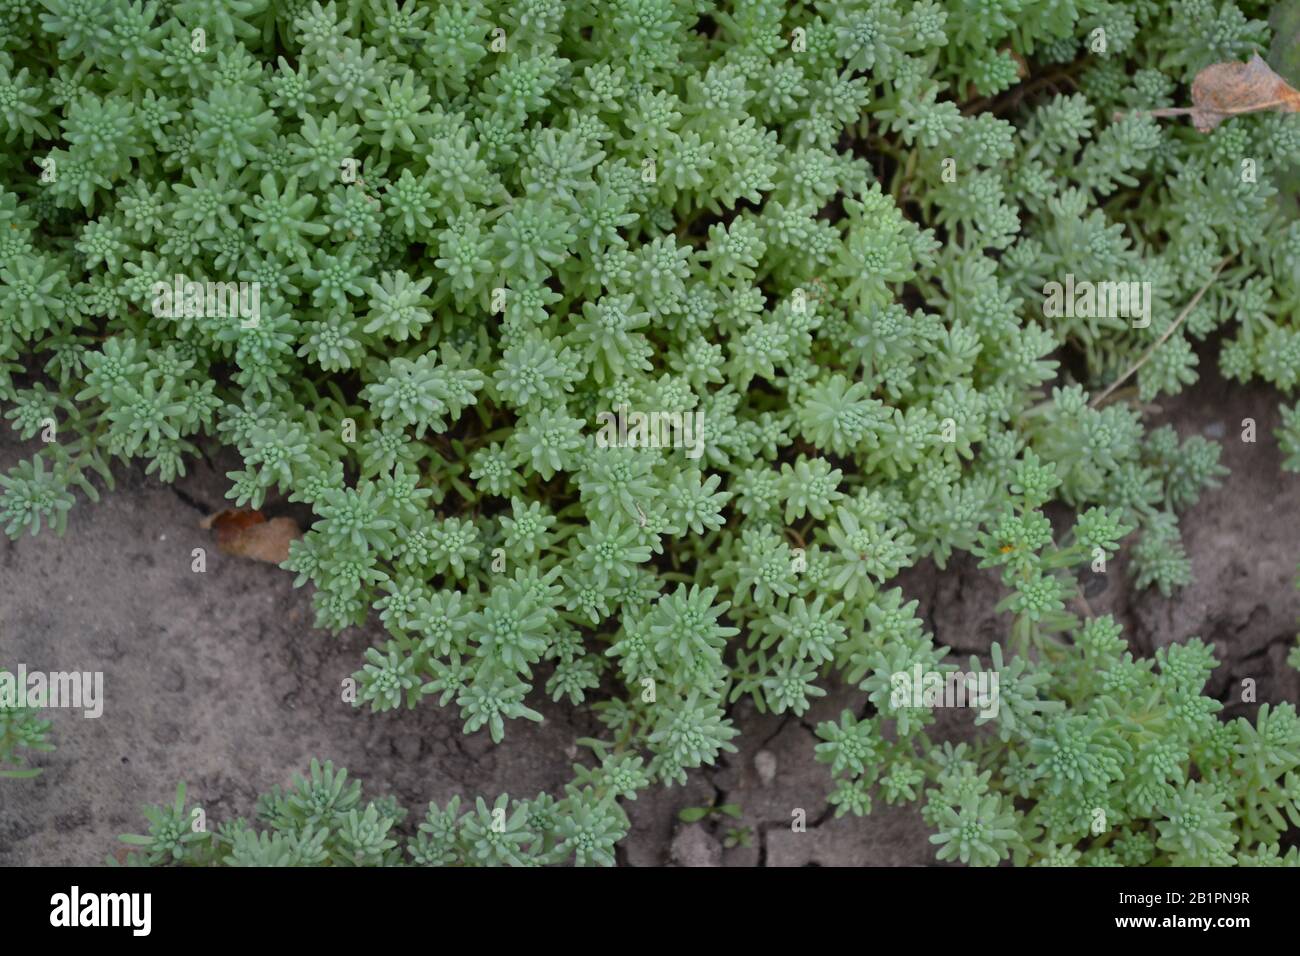 Hare cabbage. Stonecrop.  Sedum. Green moss. Decorative grassy carpet. Green flower bed decoration. Garden. A beautiful tender plant. Horizontal Stock Photo